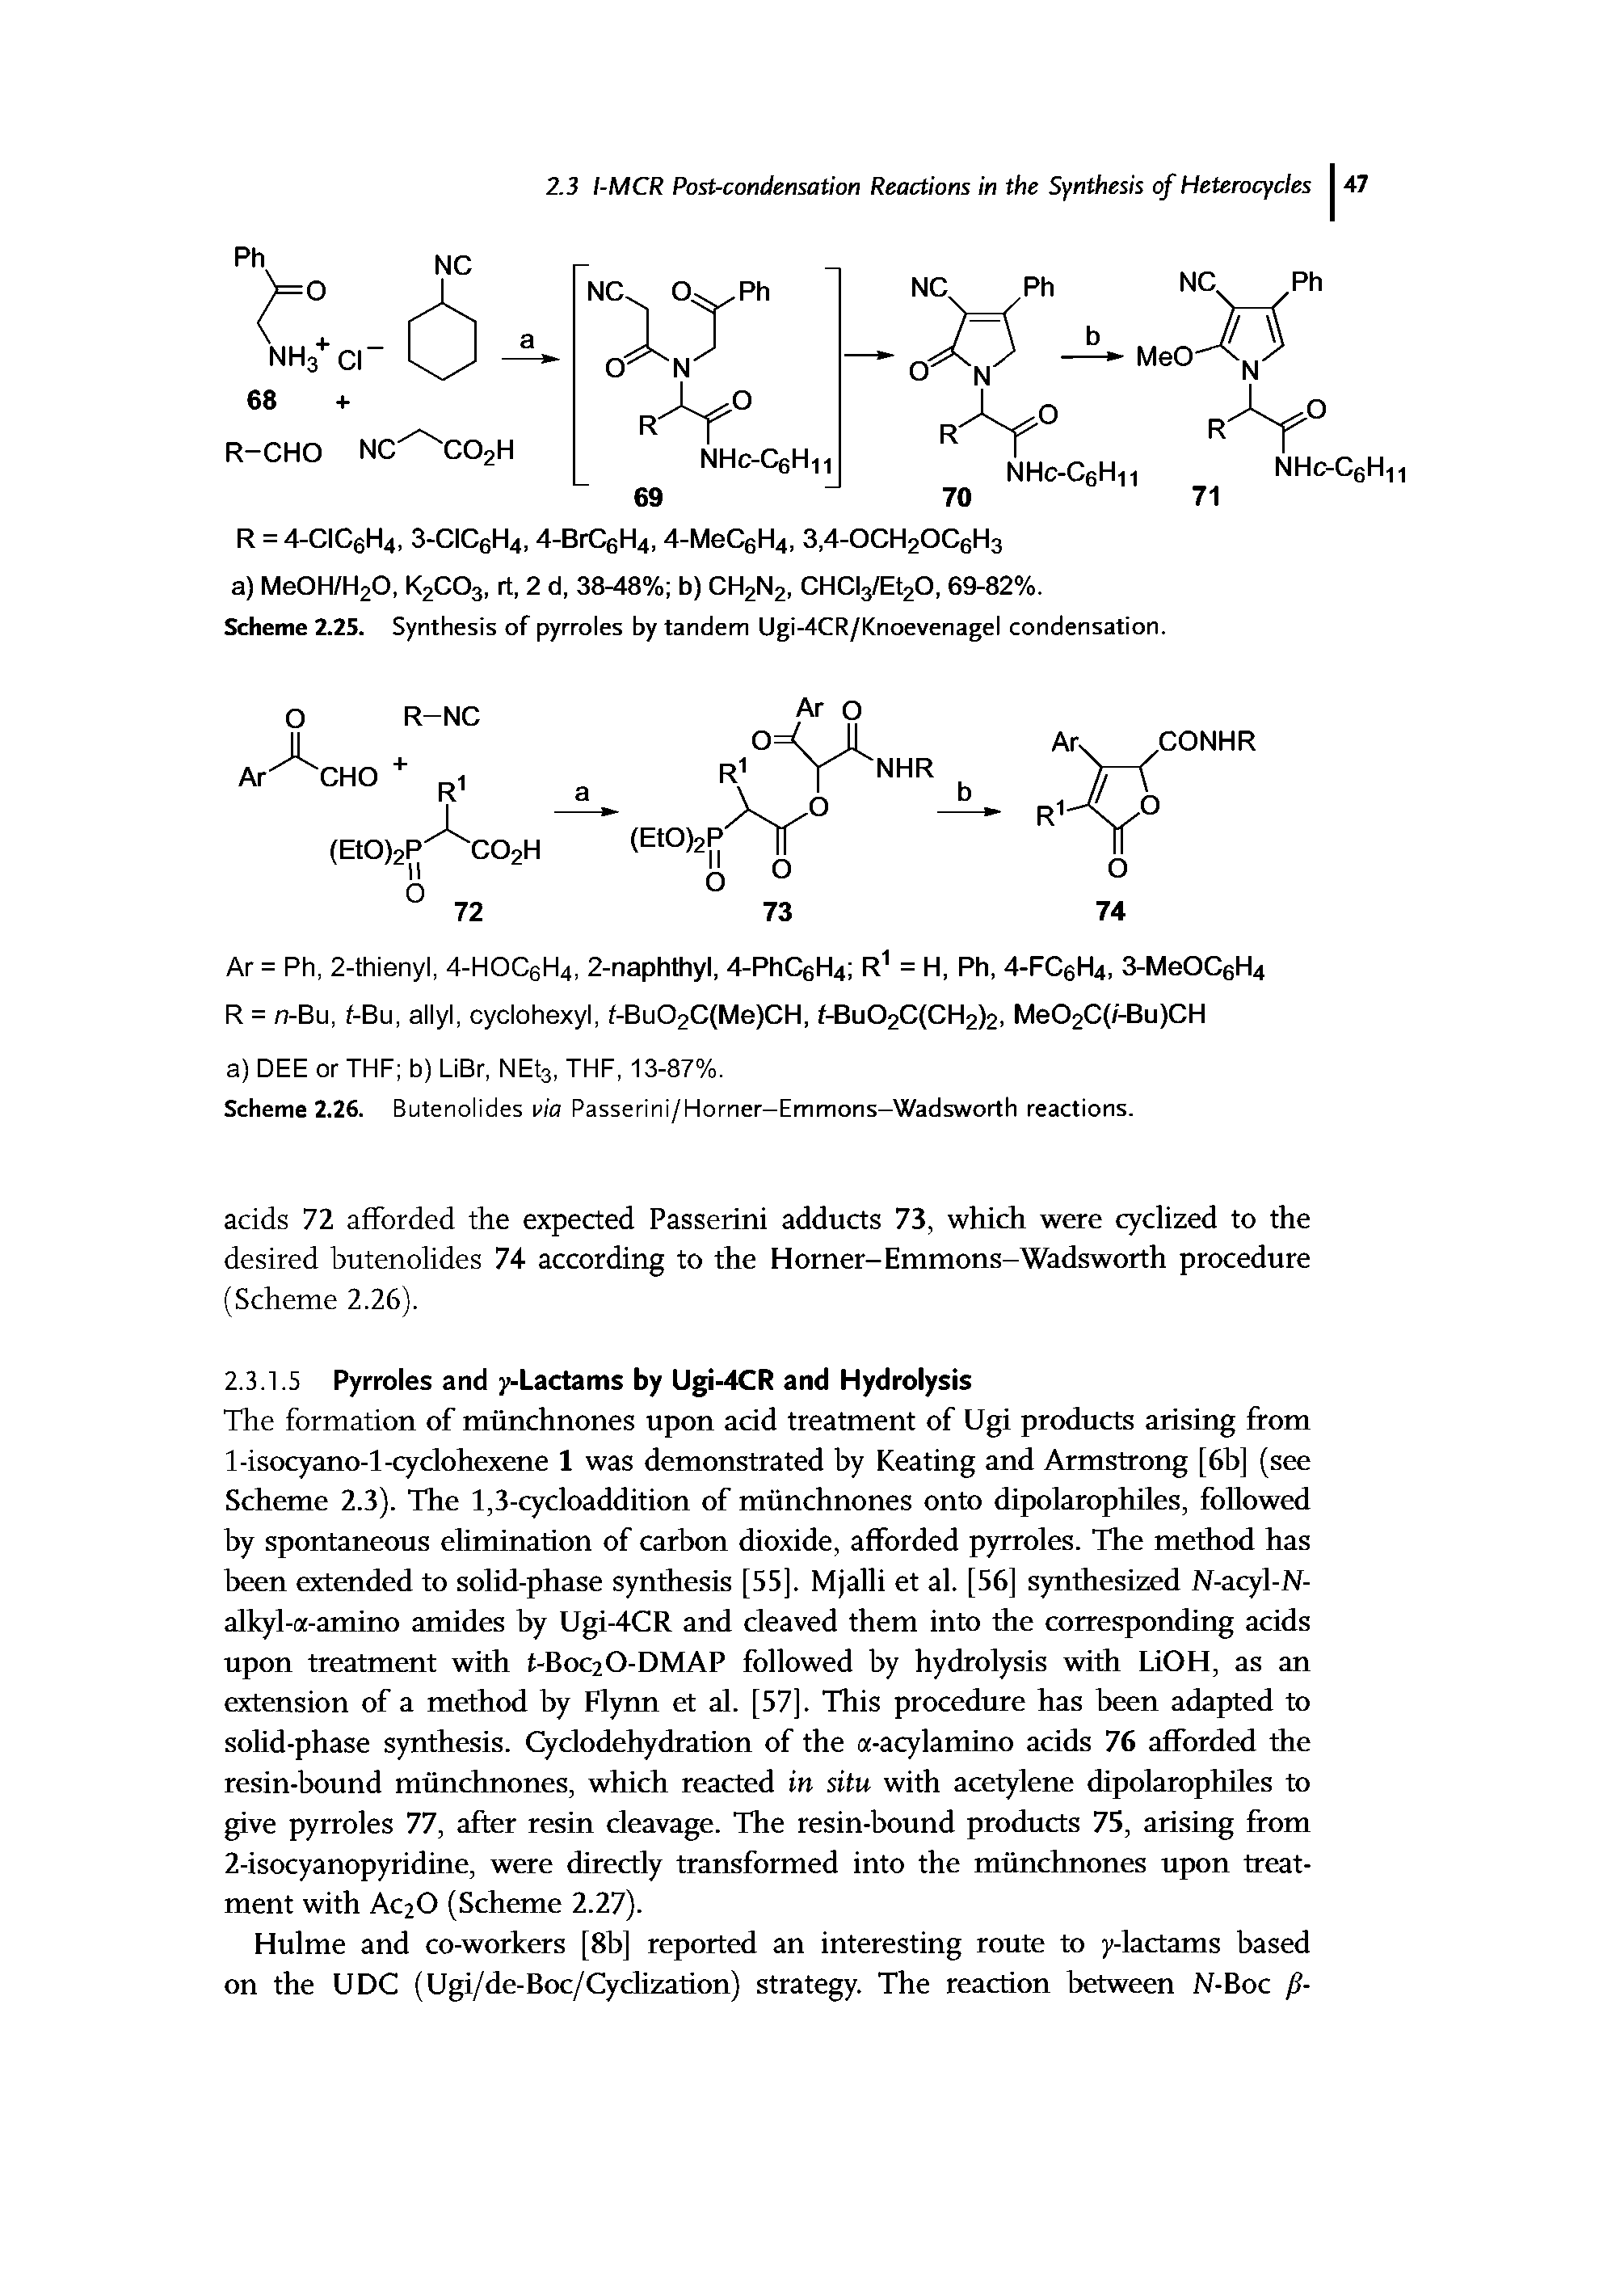 Scheme 2.25. Synthesis of pyrroles by tandem Ugi-4CR/Knoevenagel condensation.